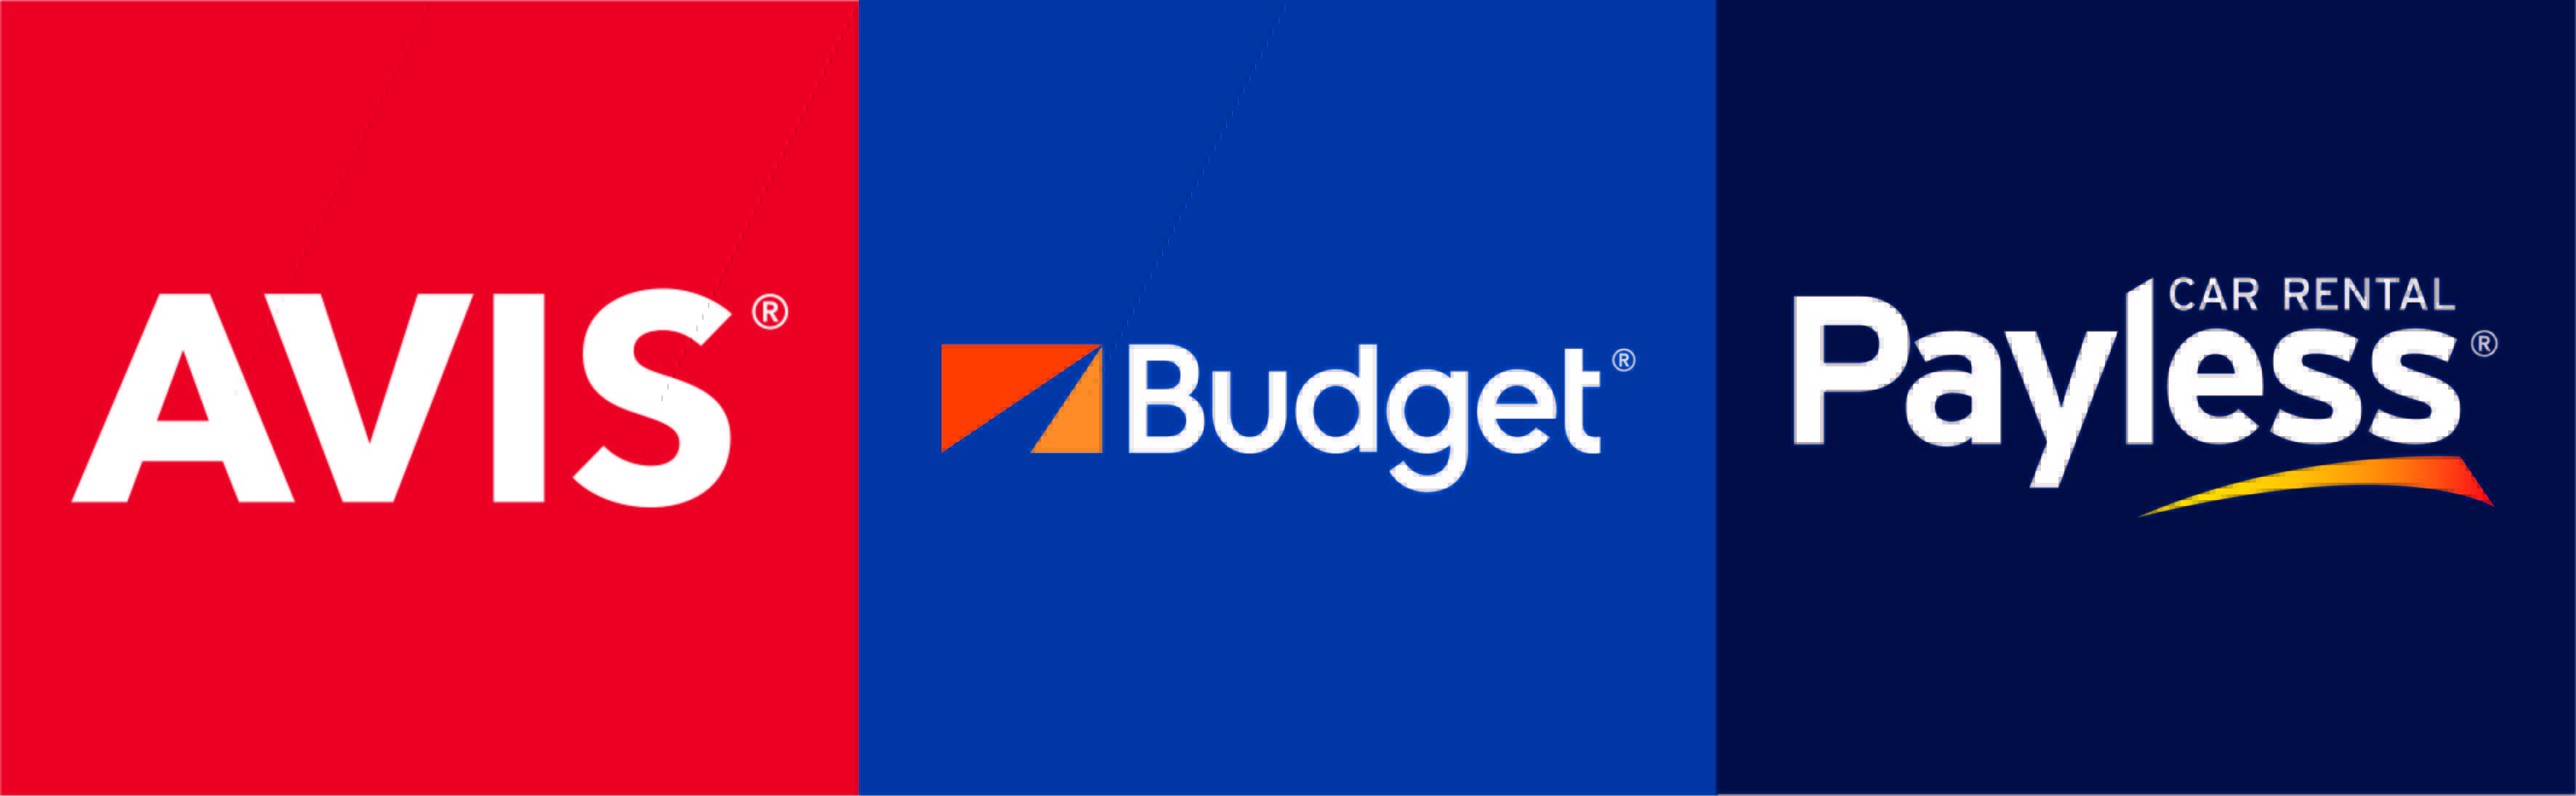 Avis Budget Logo - Car rental